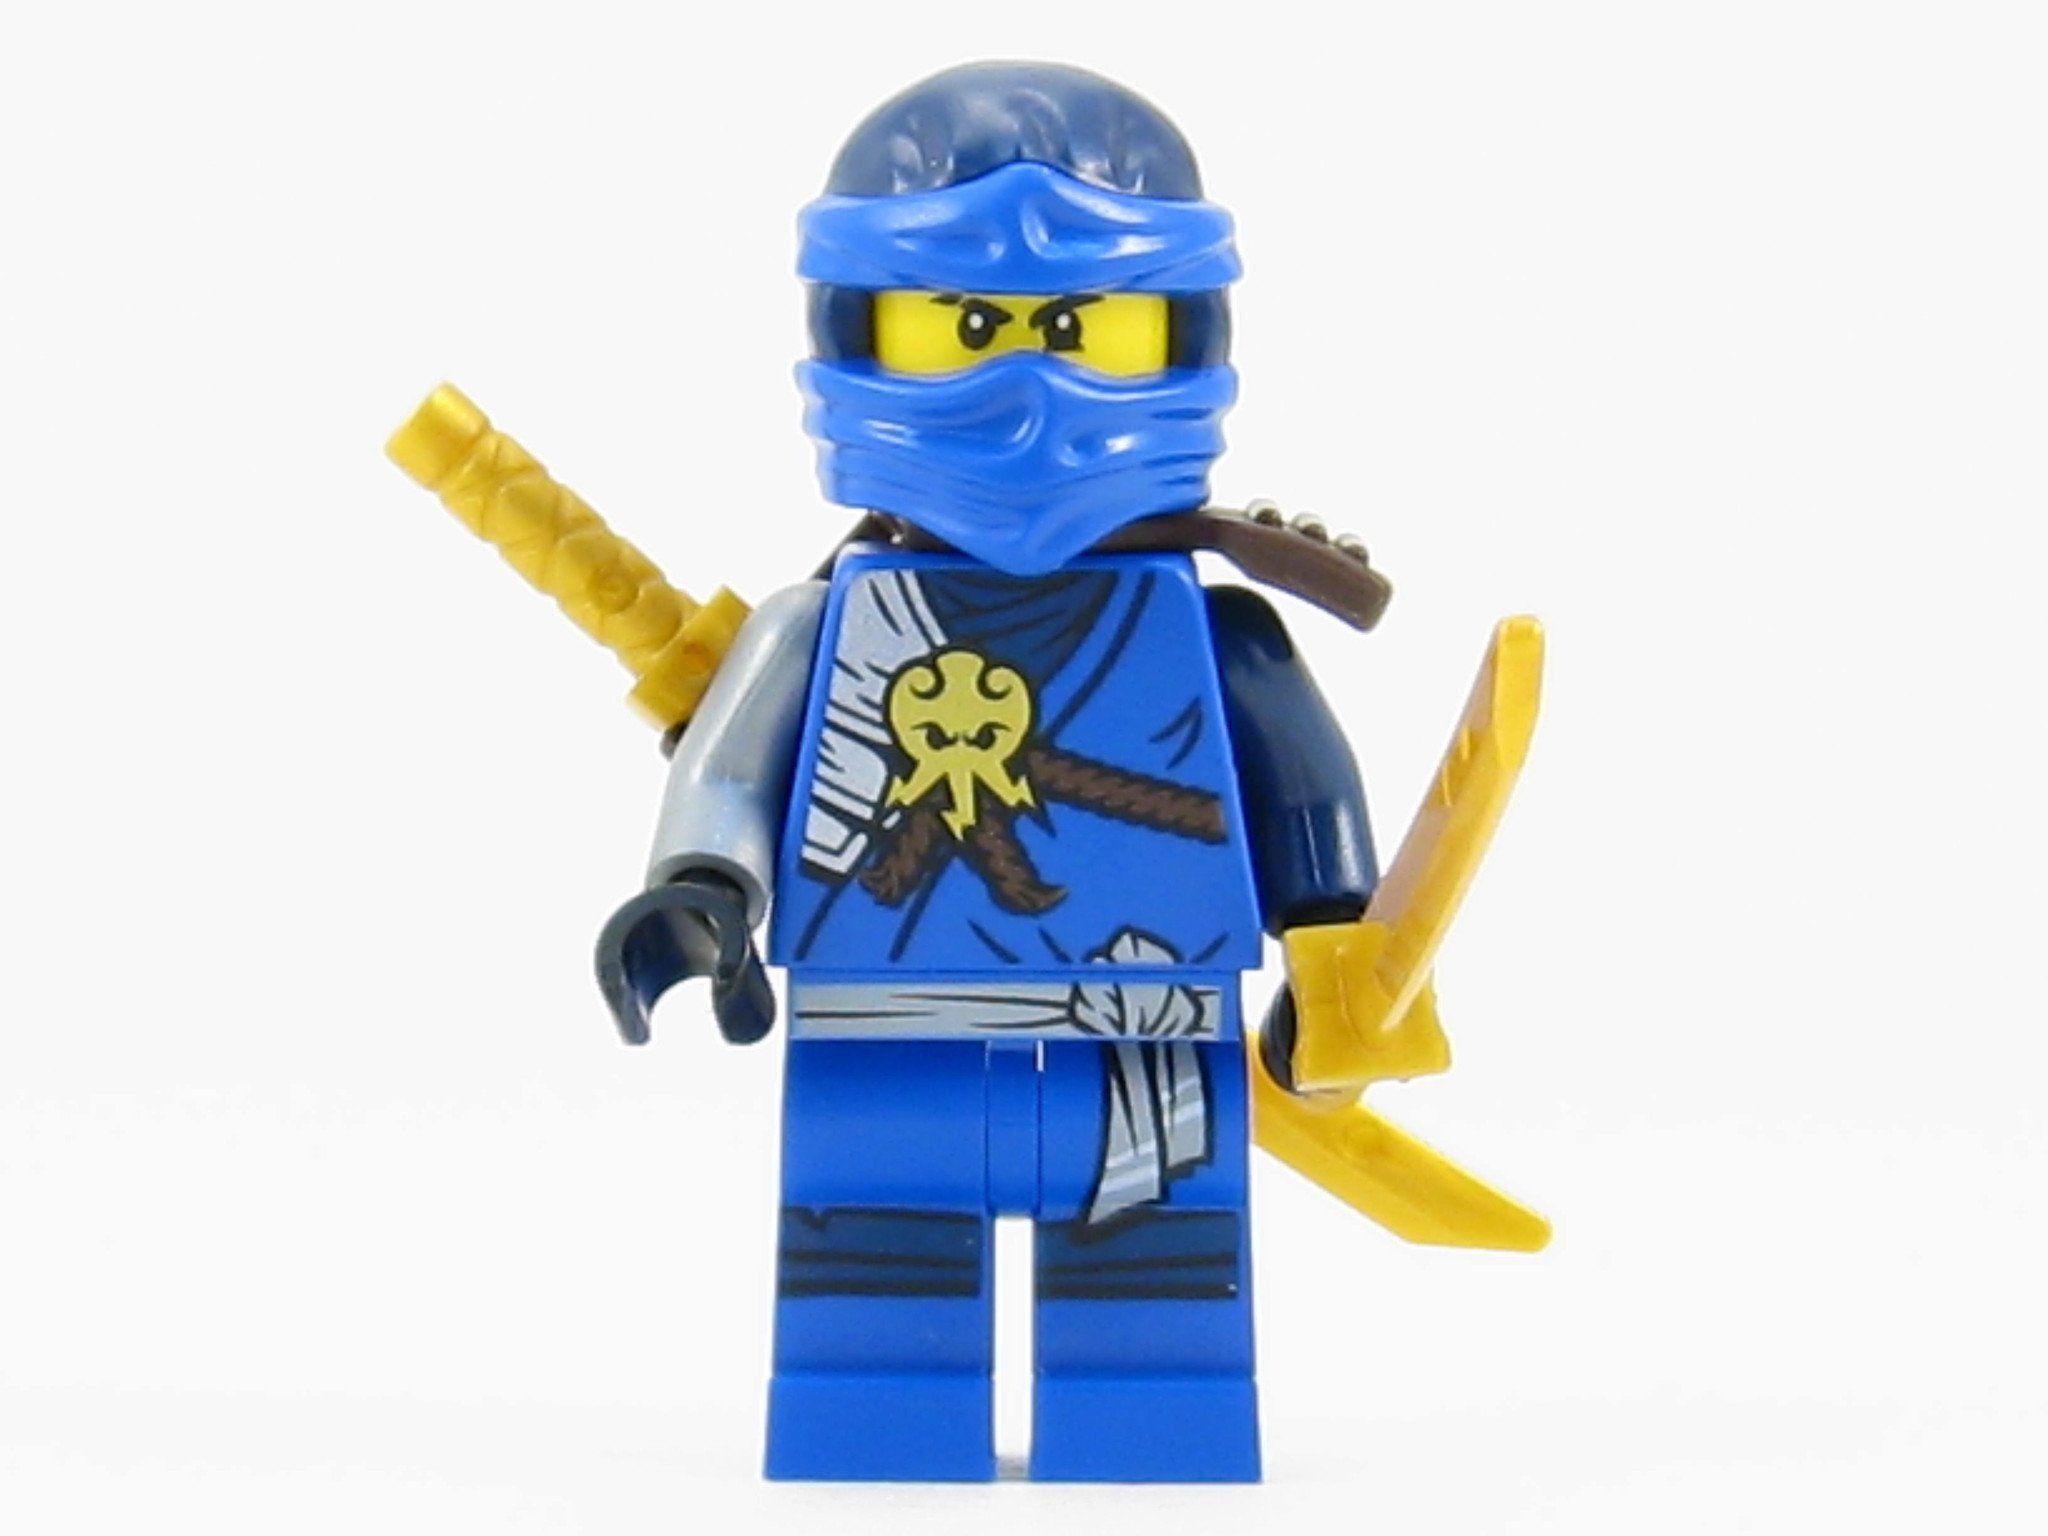 LEGO Ninjago Movie Minifigure - Jay with Blue Ninja Armor and Hair - wide 3